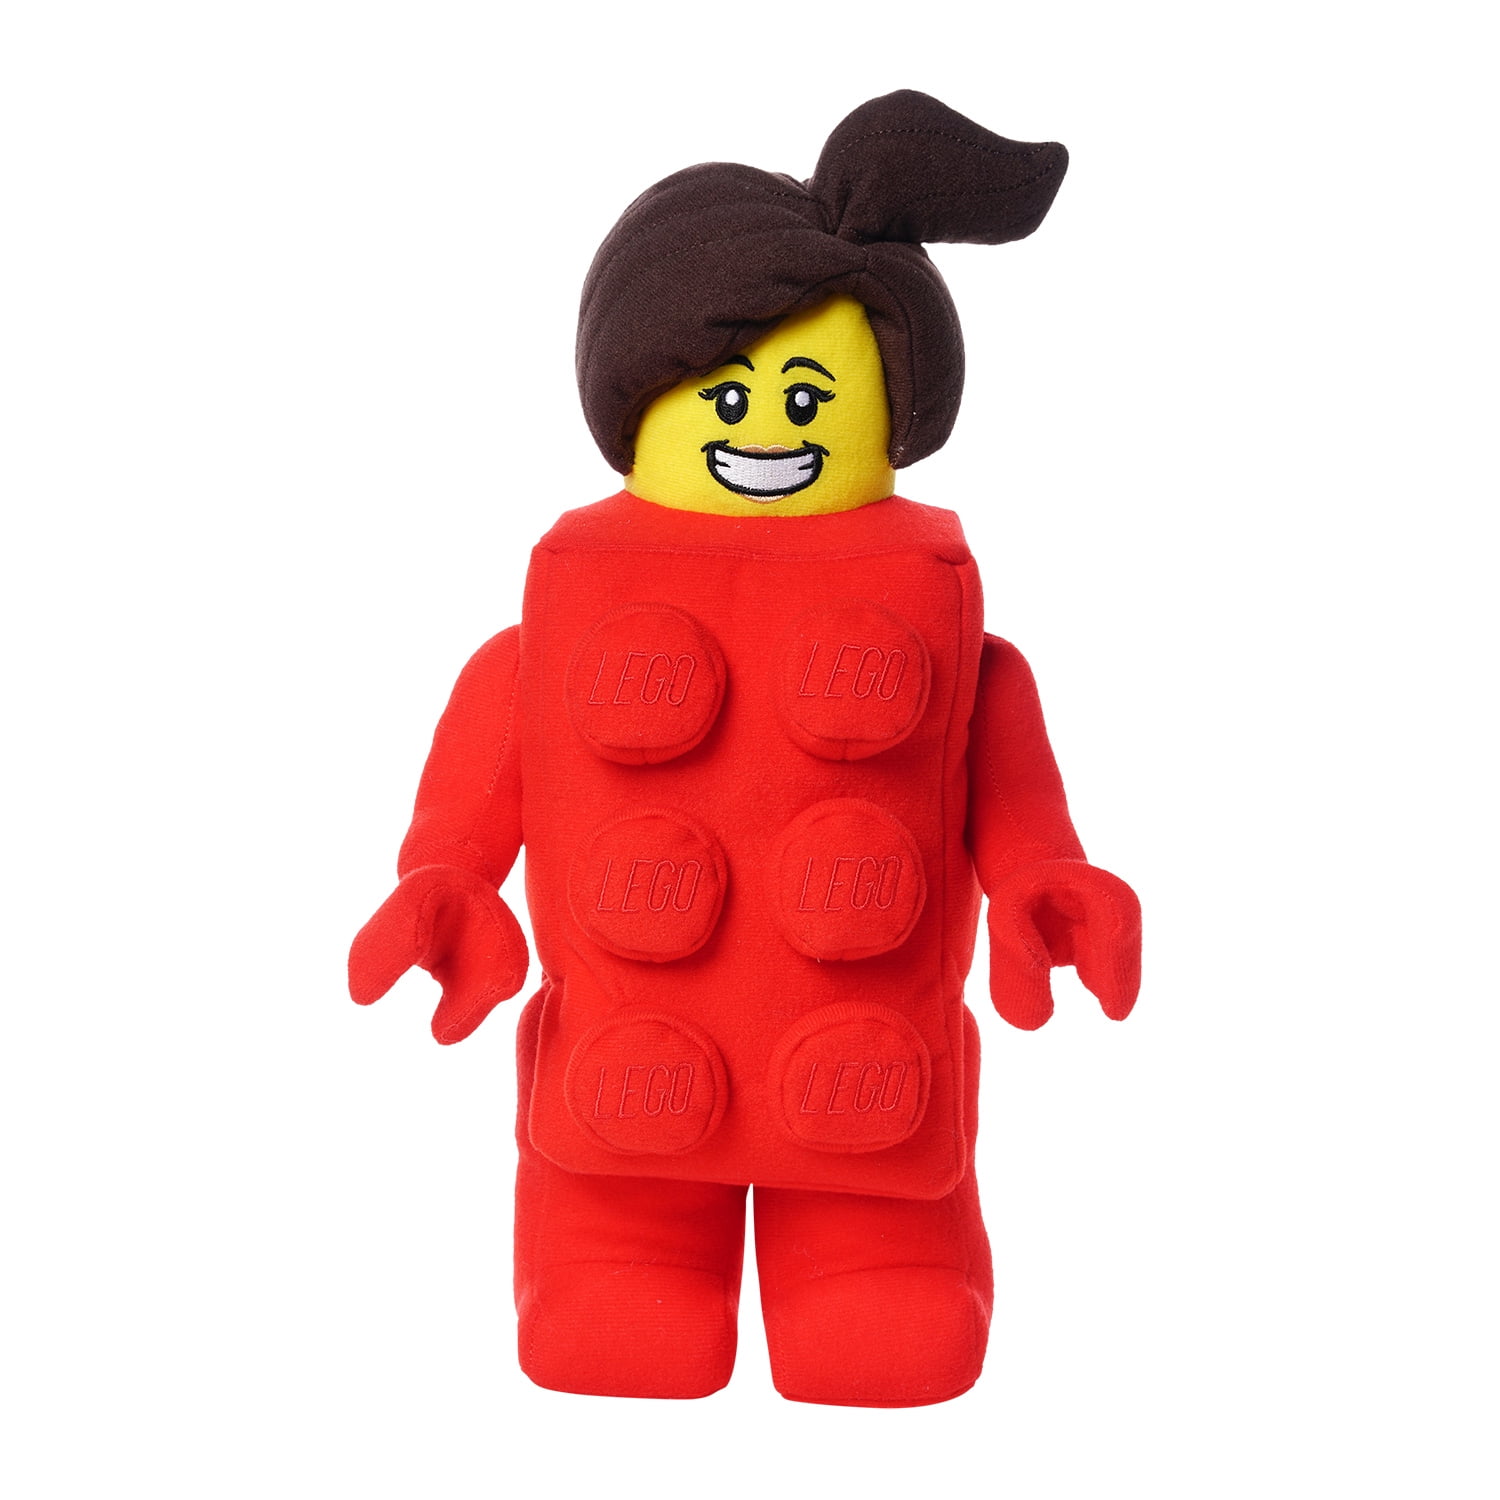 Bricks & Minifigs: LEGO® Minifigures, Sets, & Bricks Reseller